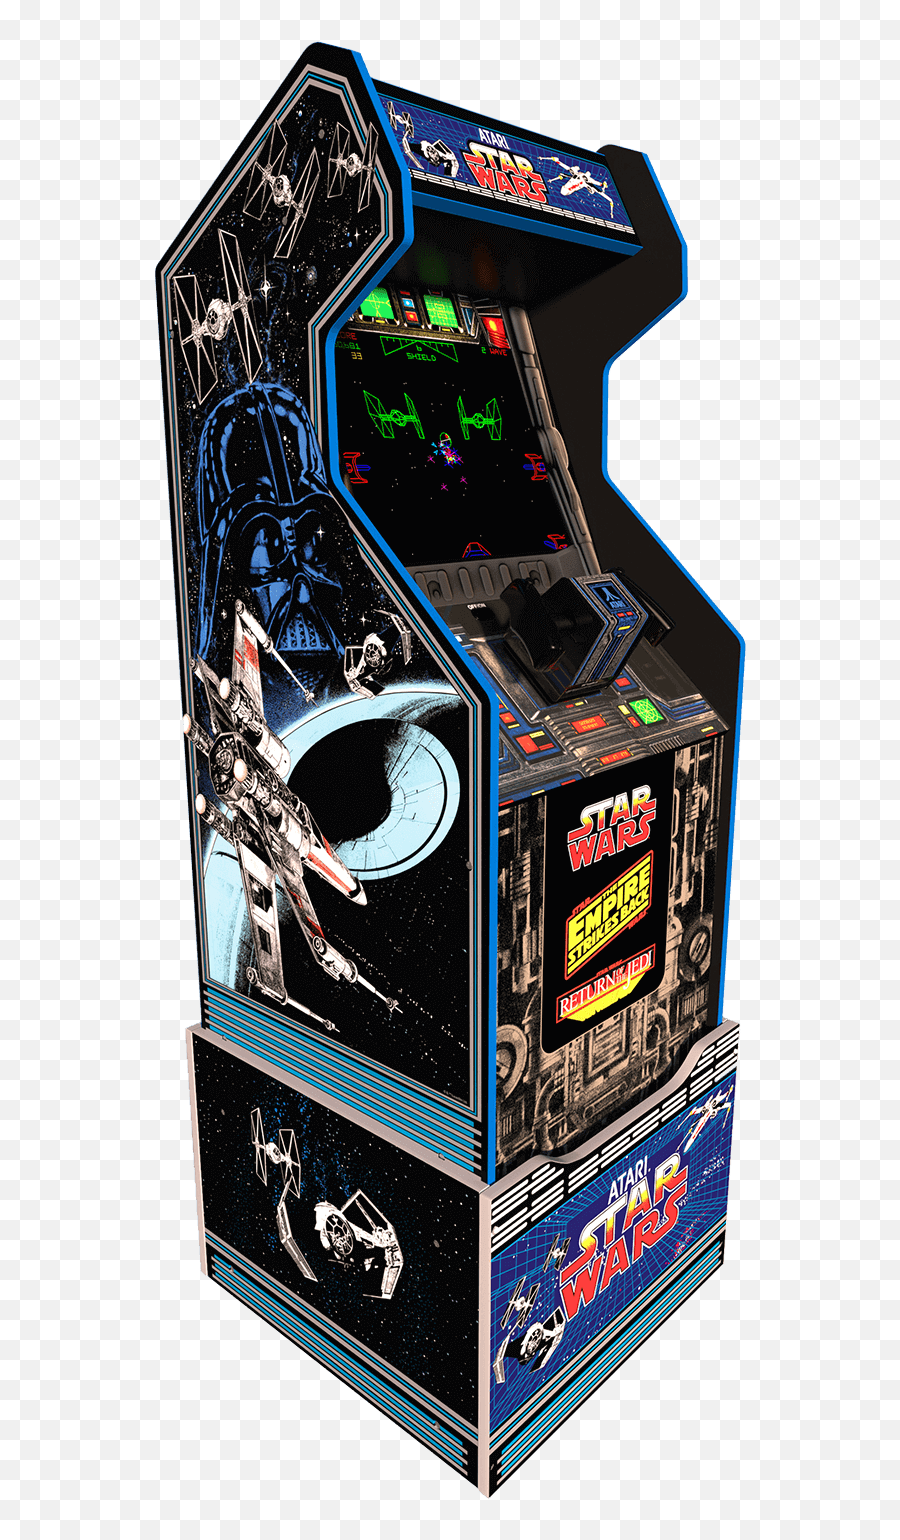 Star Wars Arcade Machine With Original Games Available To - Star Wars Arcade Cabinet Emoji,Star Wars There Is No Emotion